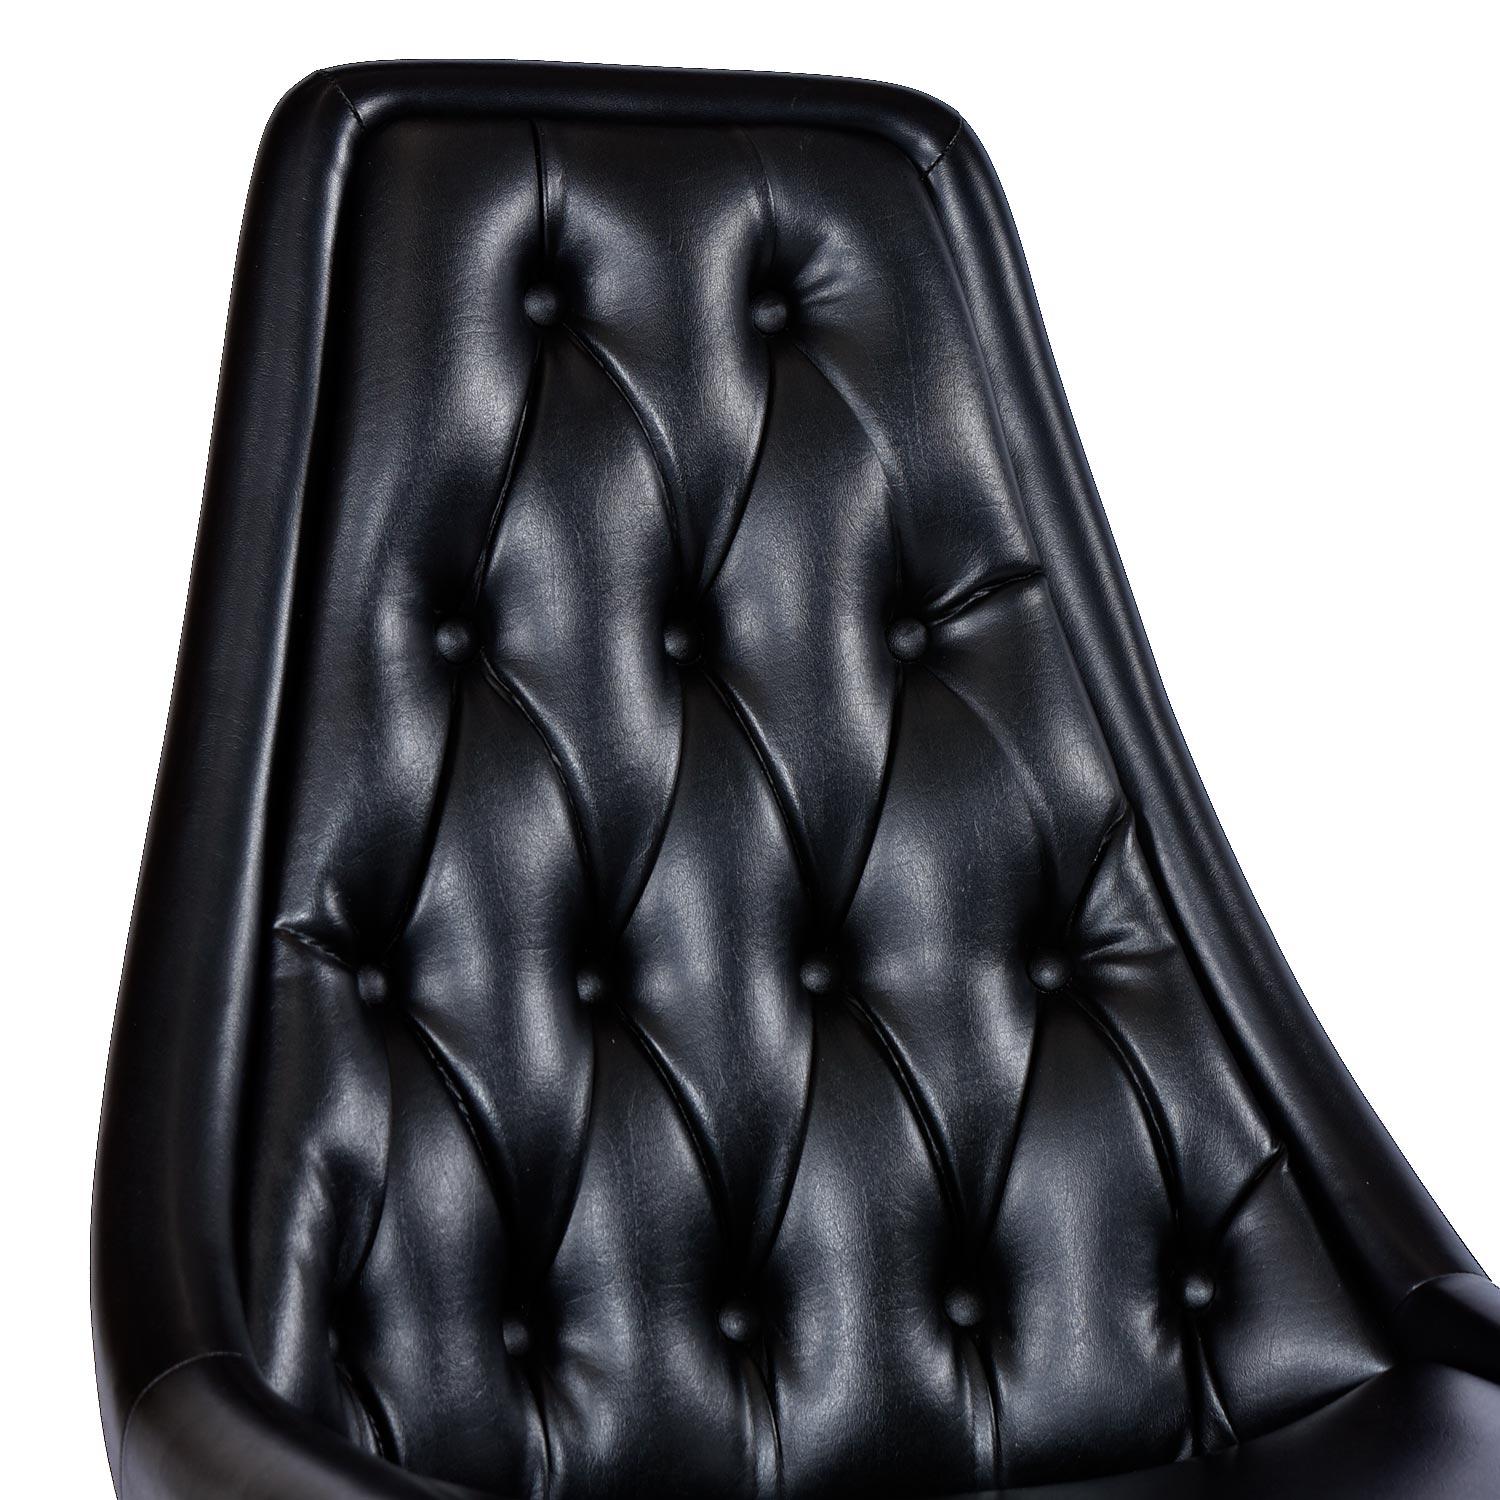 Faux Leather Chromcraft Swivel Base Tufted Black Vinyl Sculpta Unicorn Star Trek Chair Set